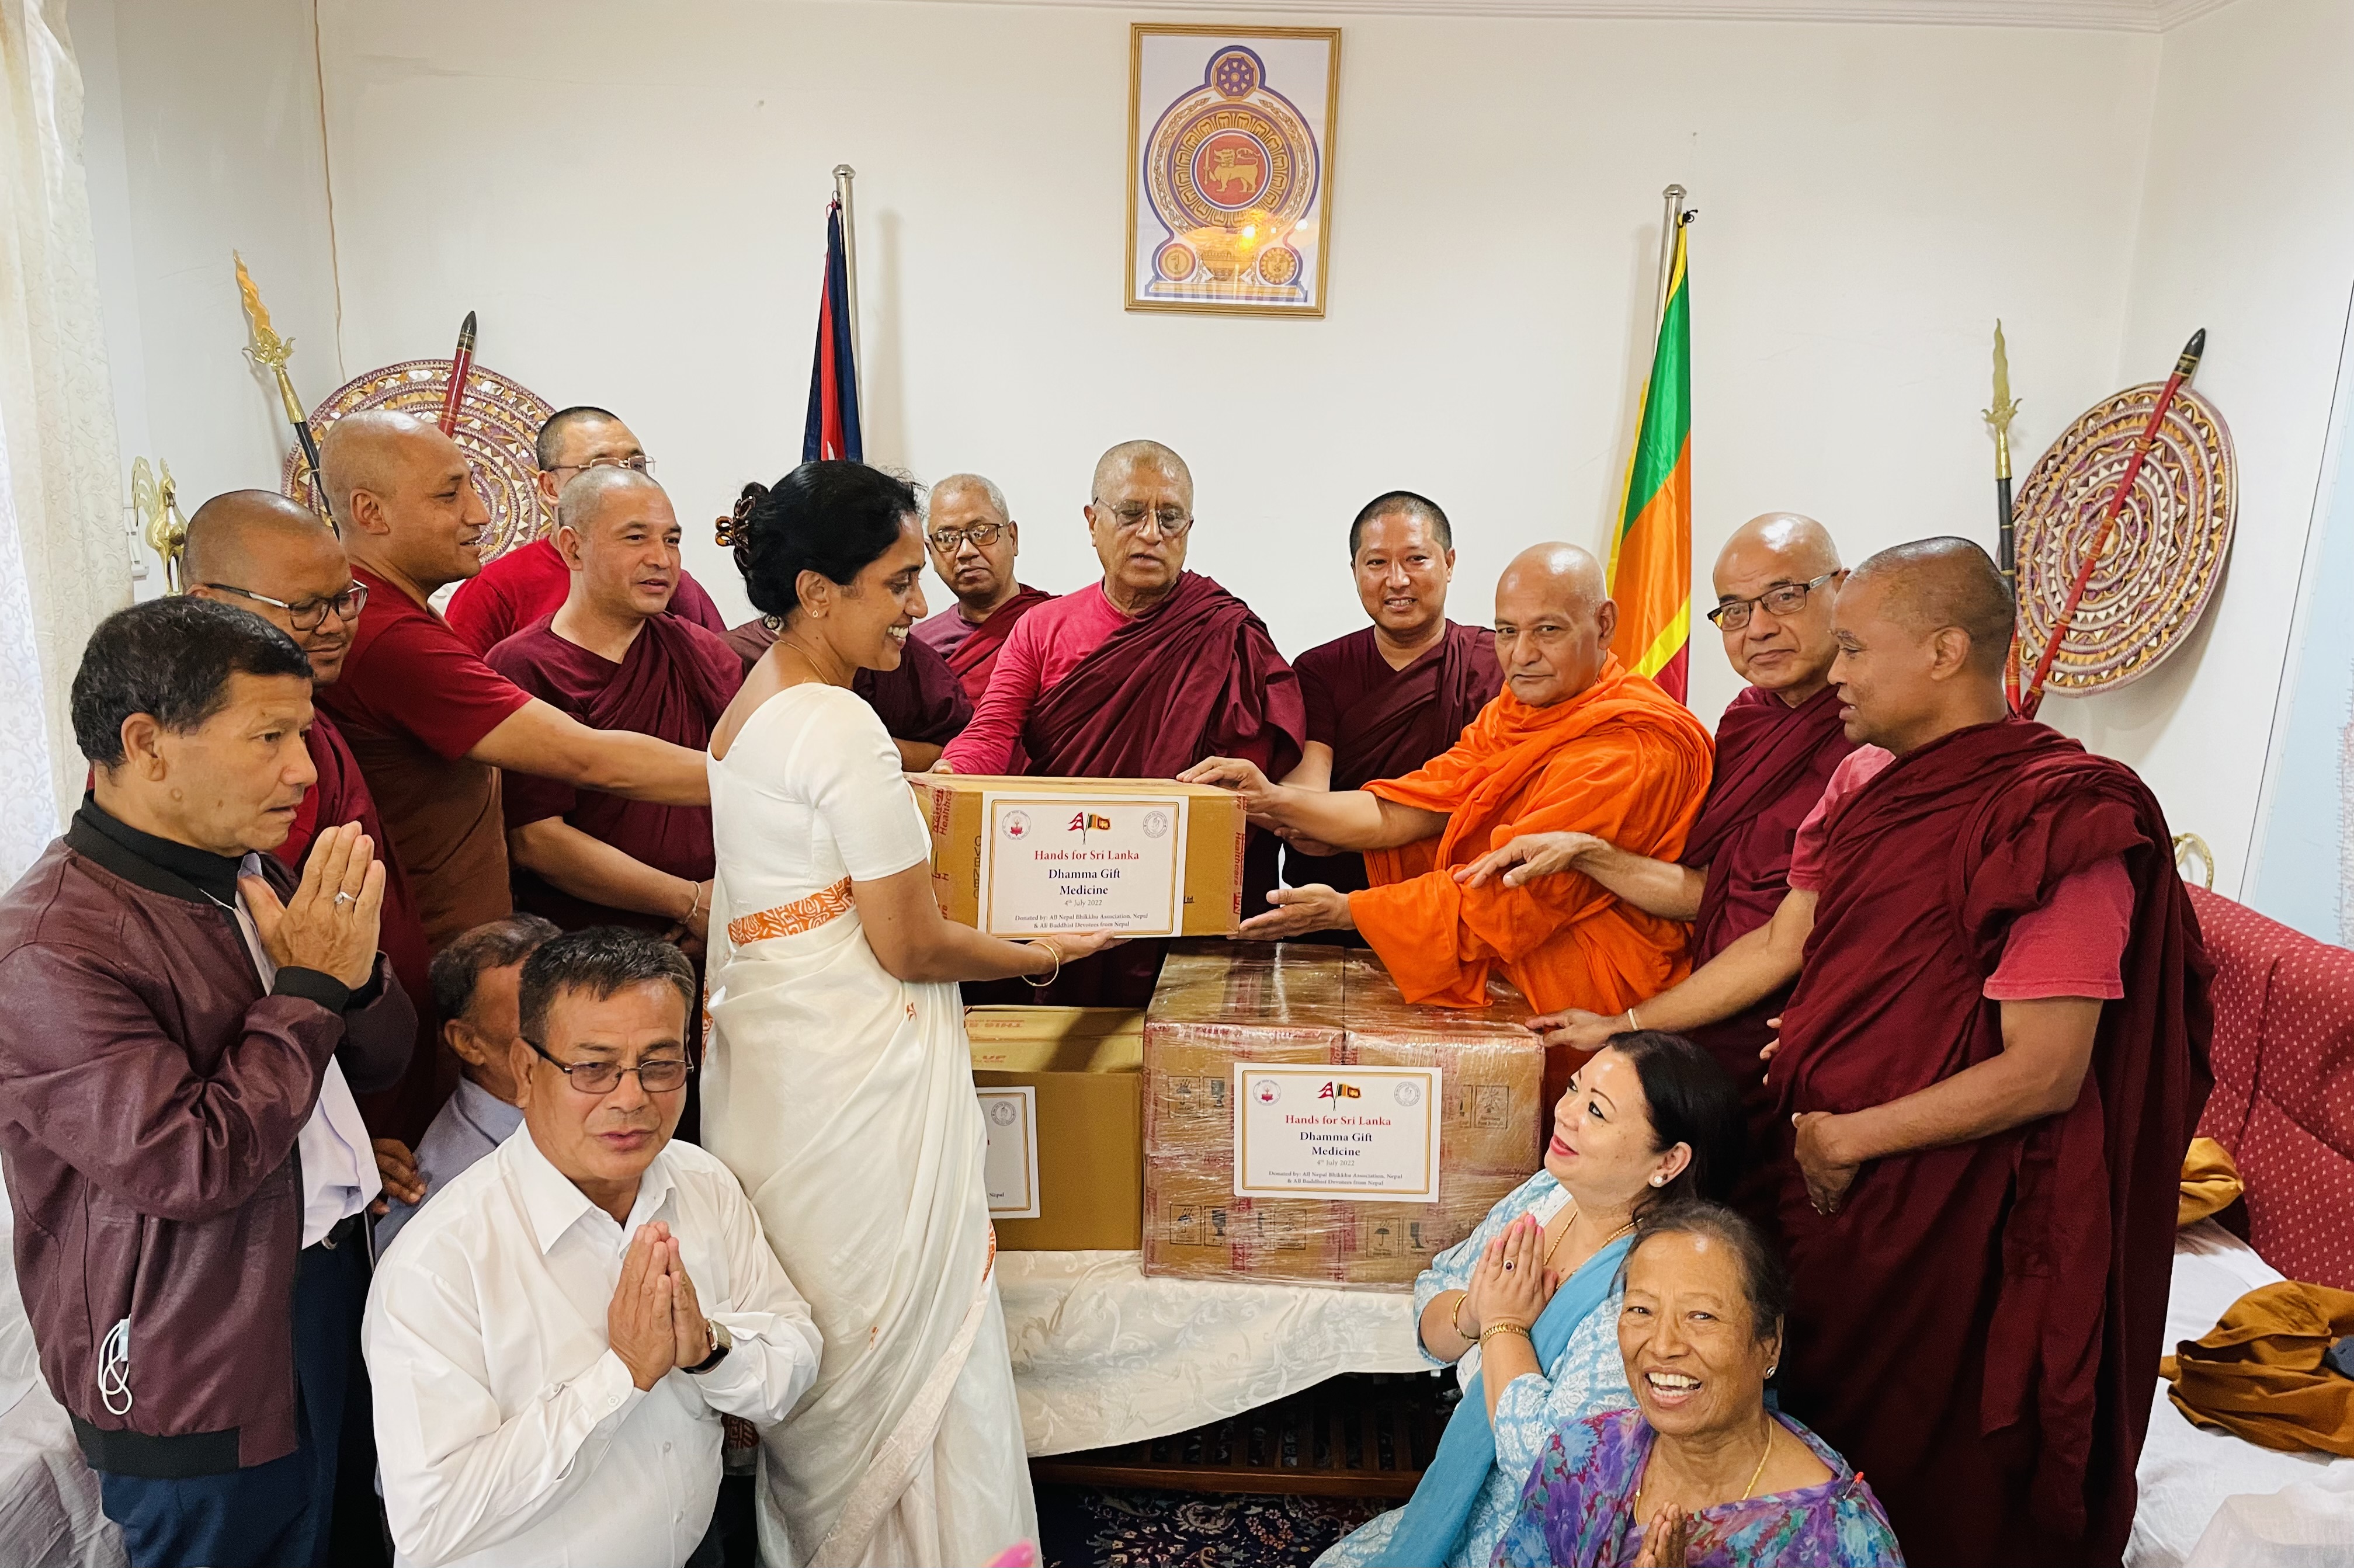 "Hands for Sri Lanka" under the All Nepal Bhikkhu Association, donates essential medicines to Sri Lanka